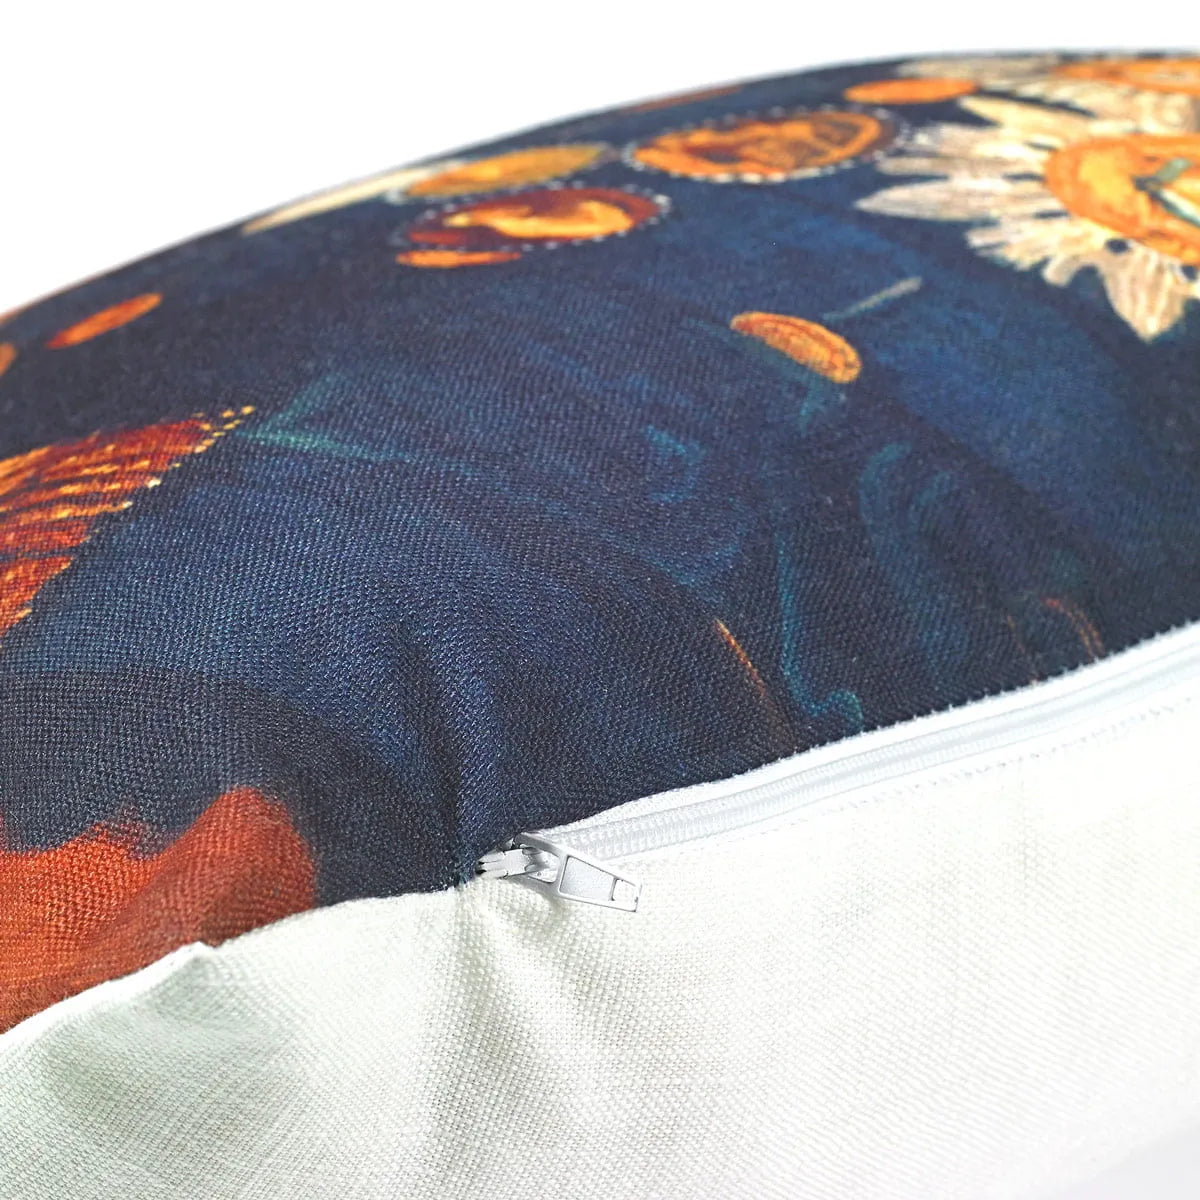 Honeysuckle - William Morris Cushion - Decorative Throw Pillow - Throw Pillows - Aesthetic Art